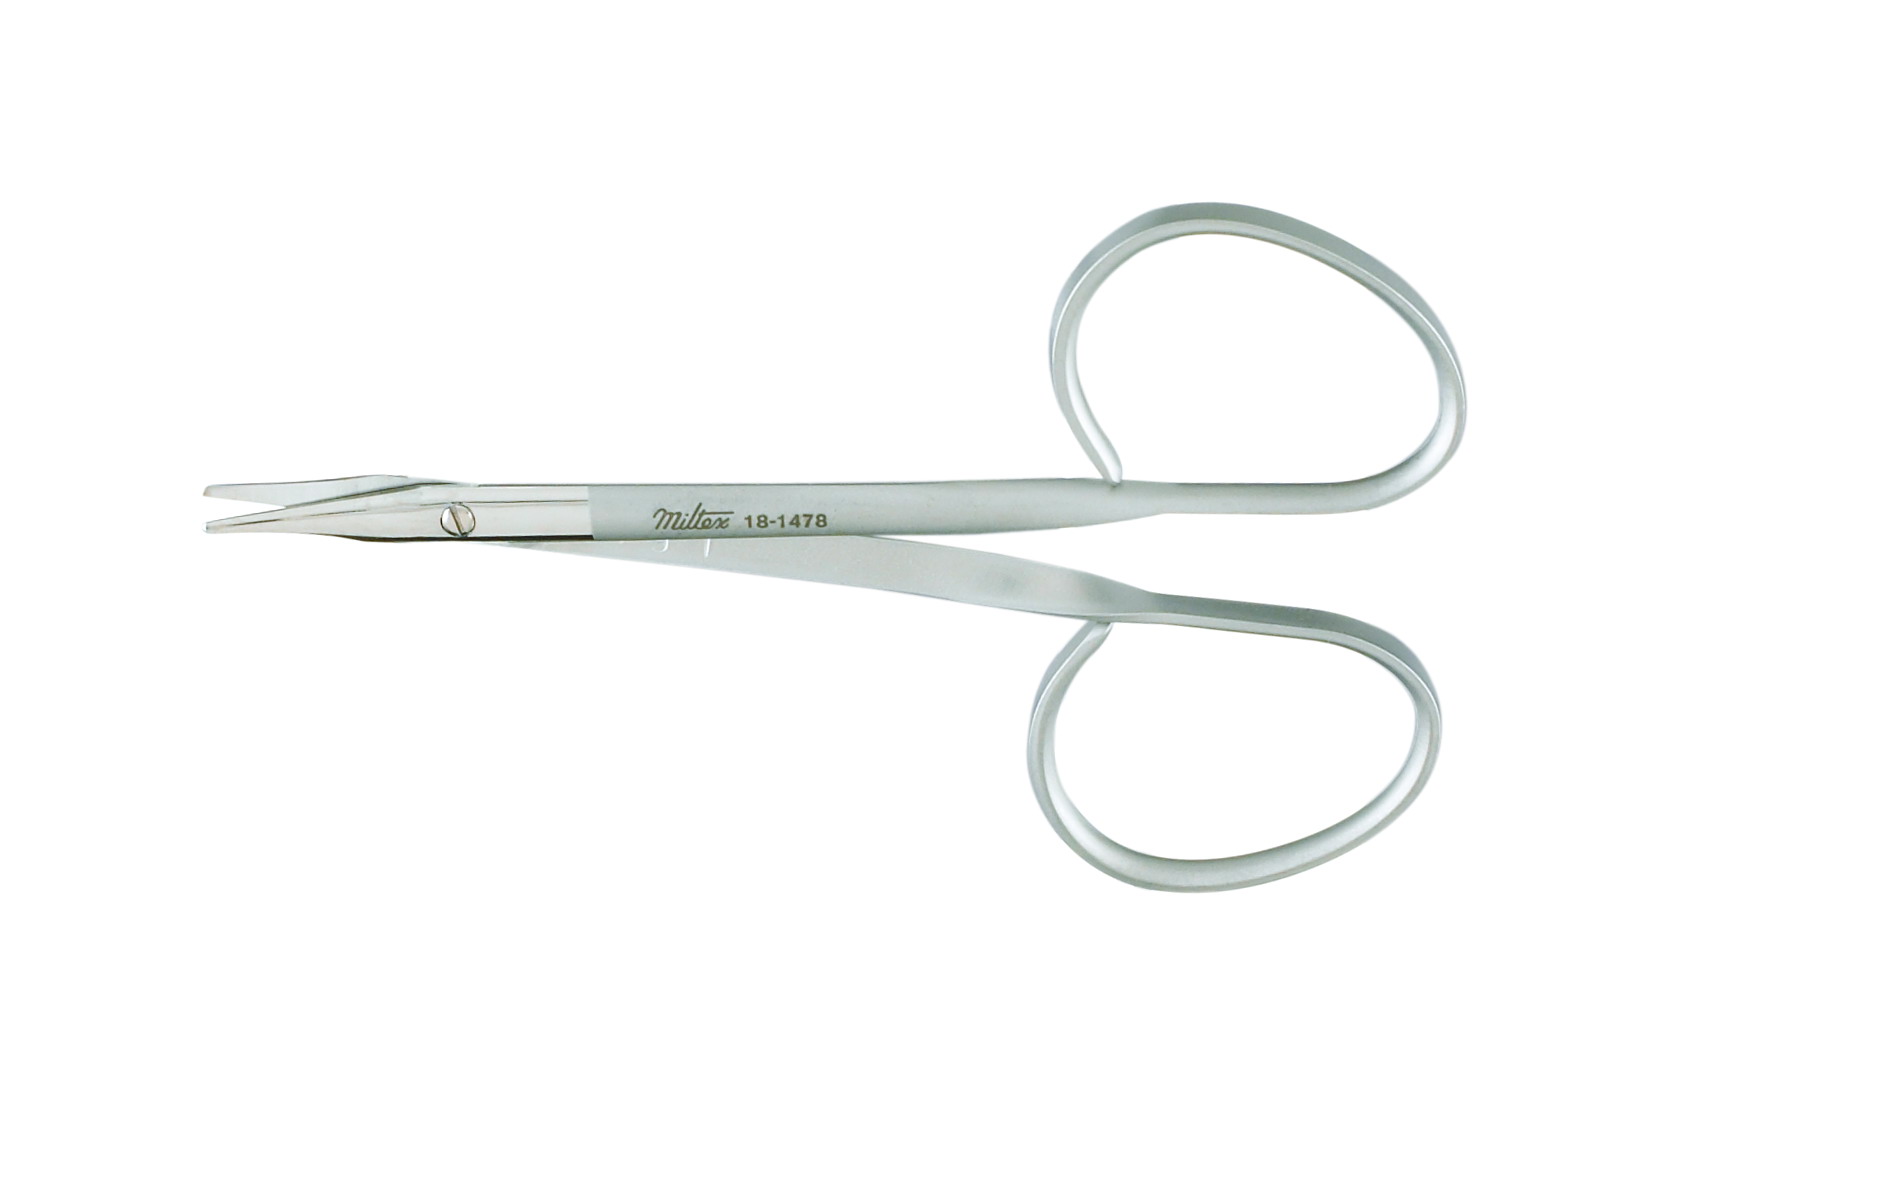 stevens-tenotomy-scissors-3-3-4-95-cm-curved-blunt-point-ribbon-type-18-1478-miltex.jpg